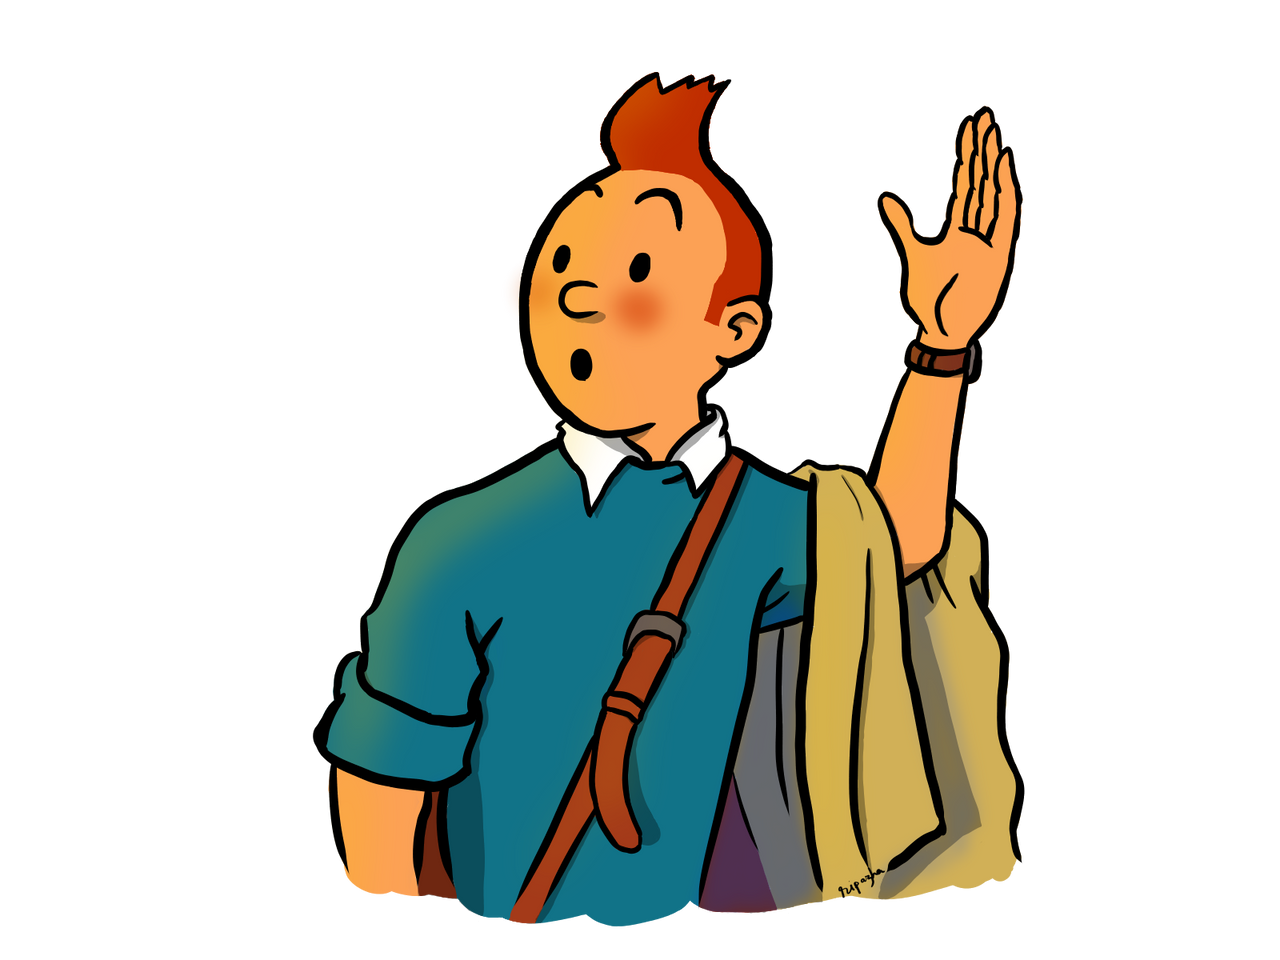 Tintin Transparent BG by RIP4ZH4 on DeviantArt